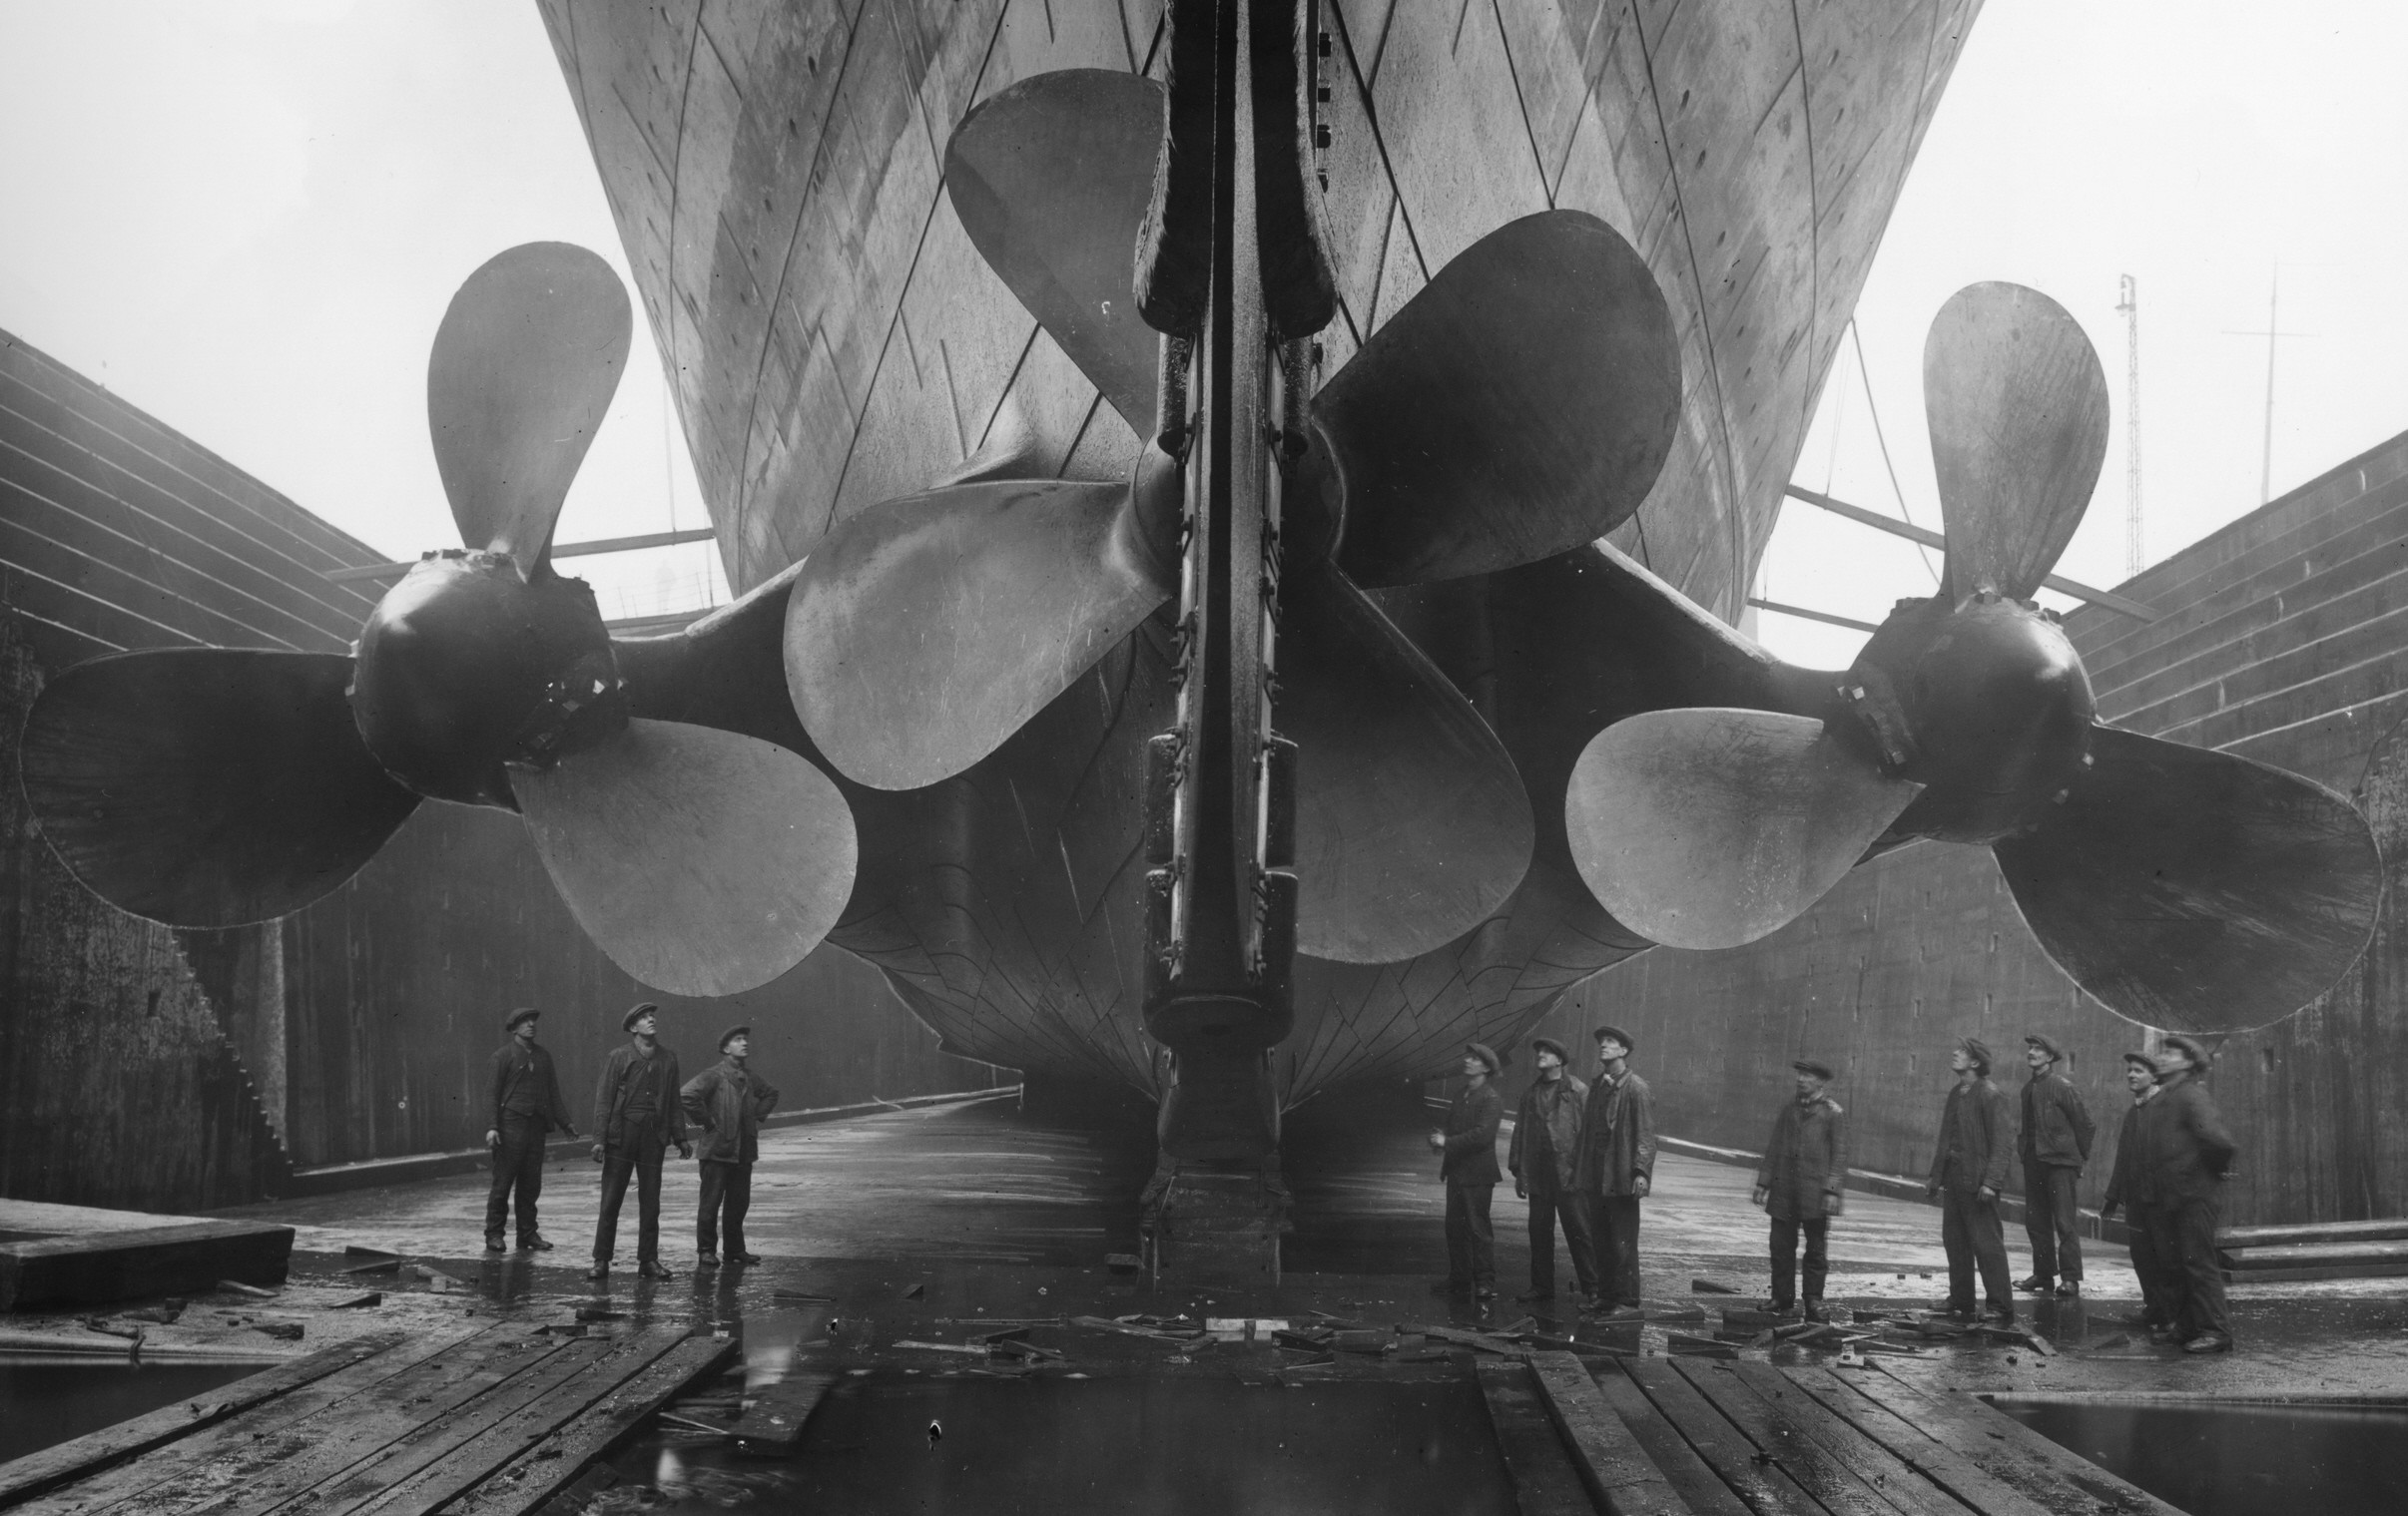 Wallpaper ship propeller dock titanic belfast light lighting photograph darkness black and white monochrome photography film noir x px x